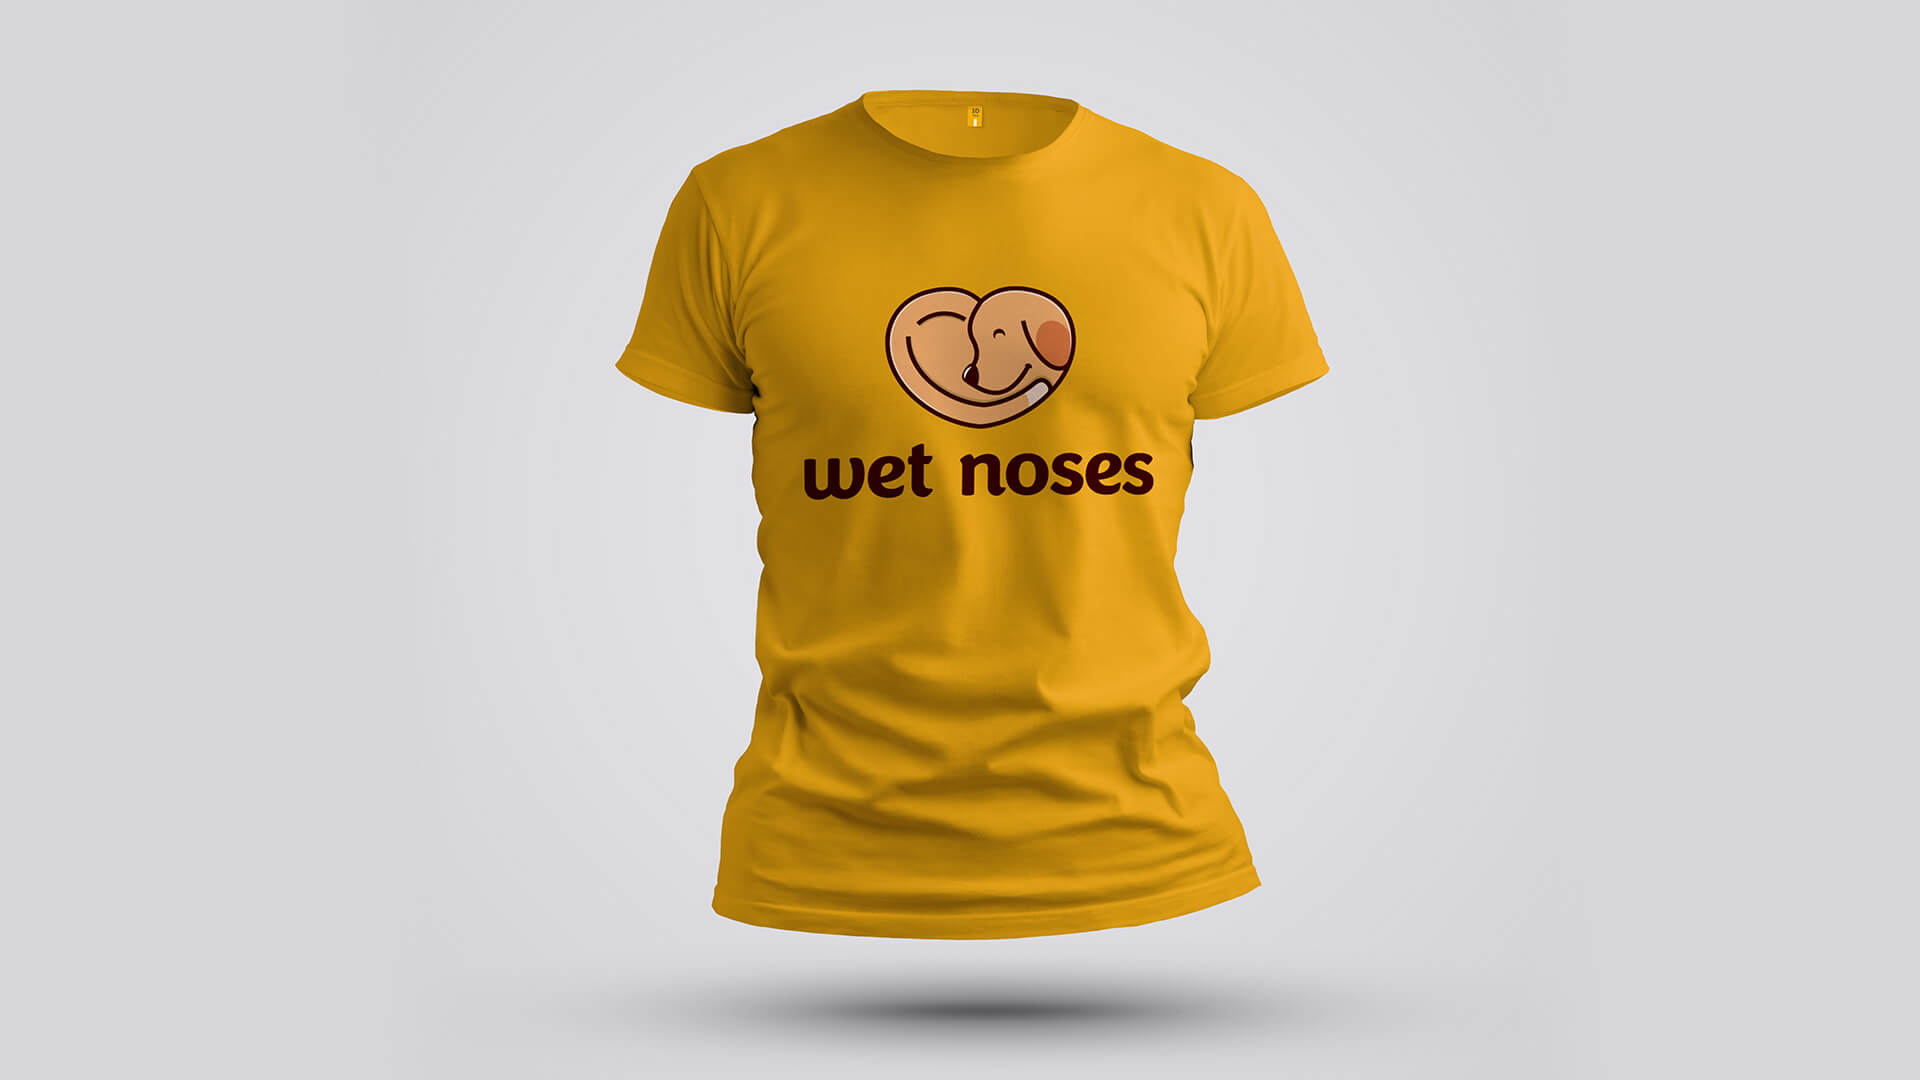 https://alinemedeiros.com/wp-content/uploads/2023/02/wet-nose-tshirt.jpg